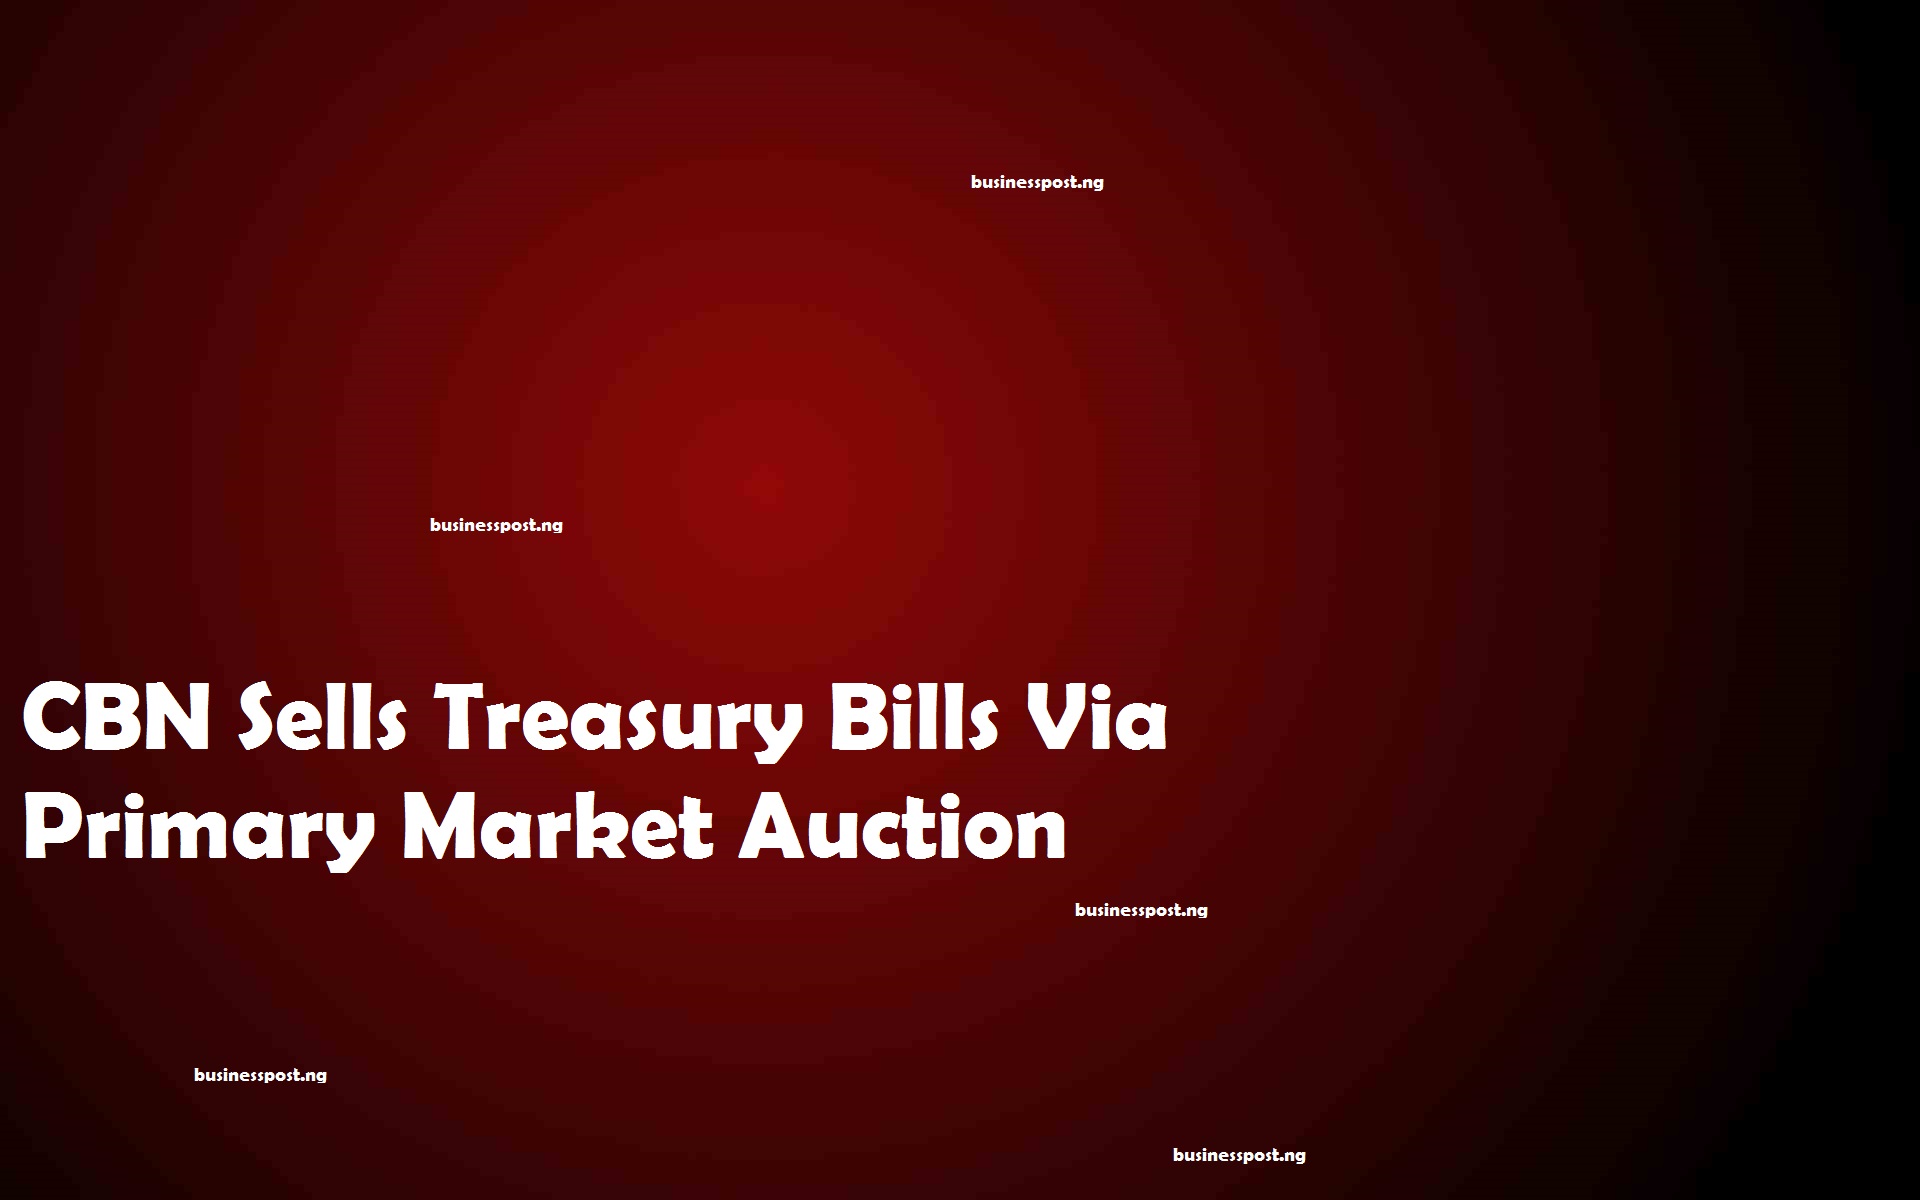 PMA treasury bills